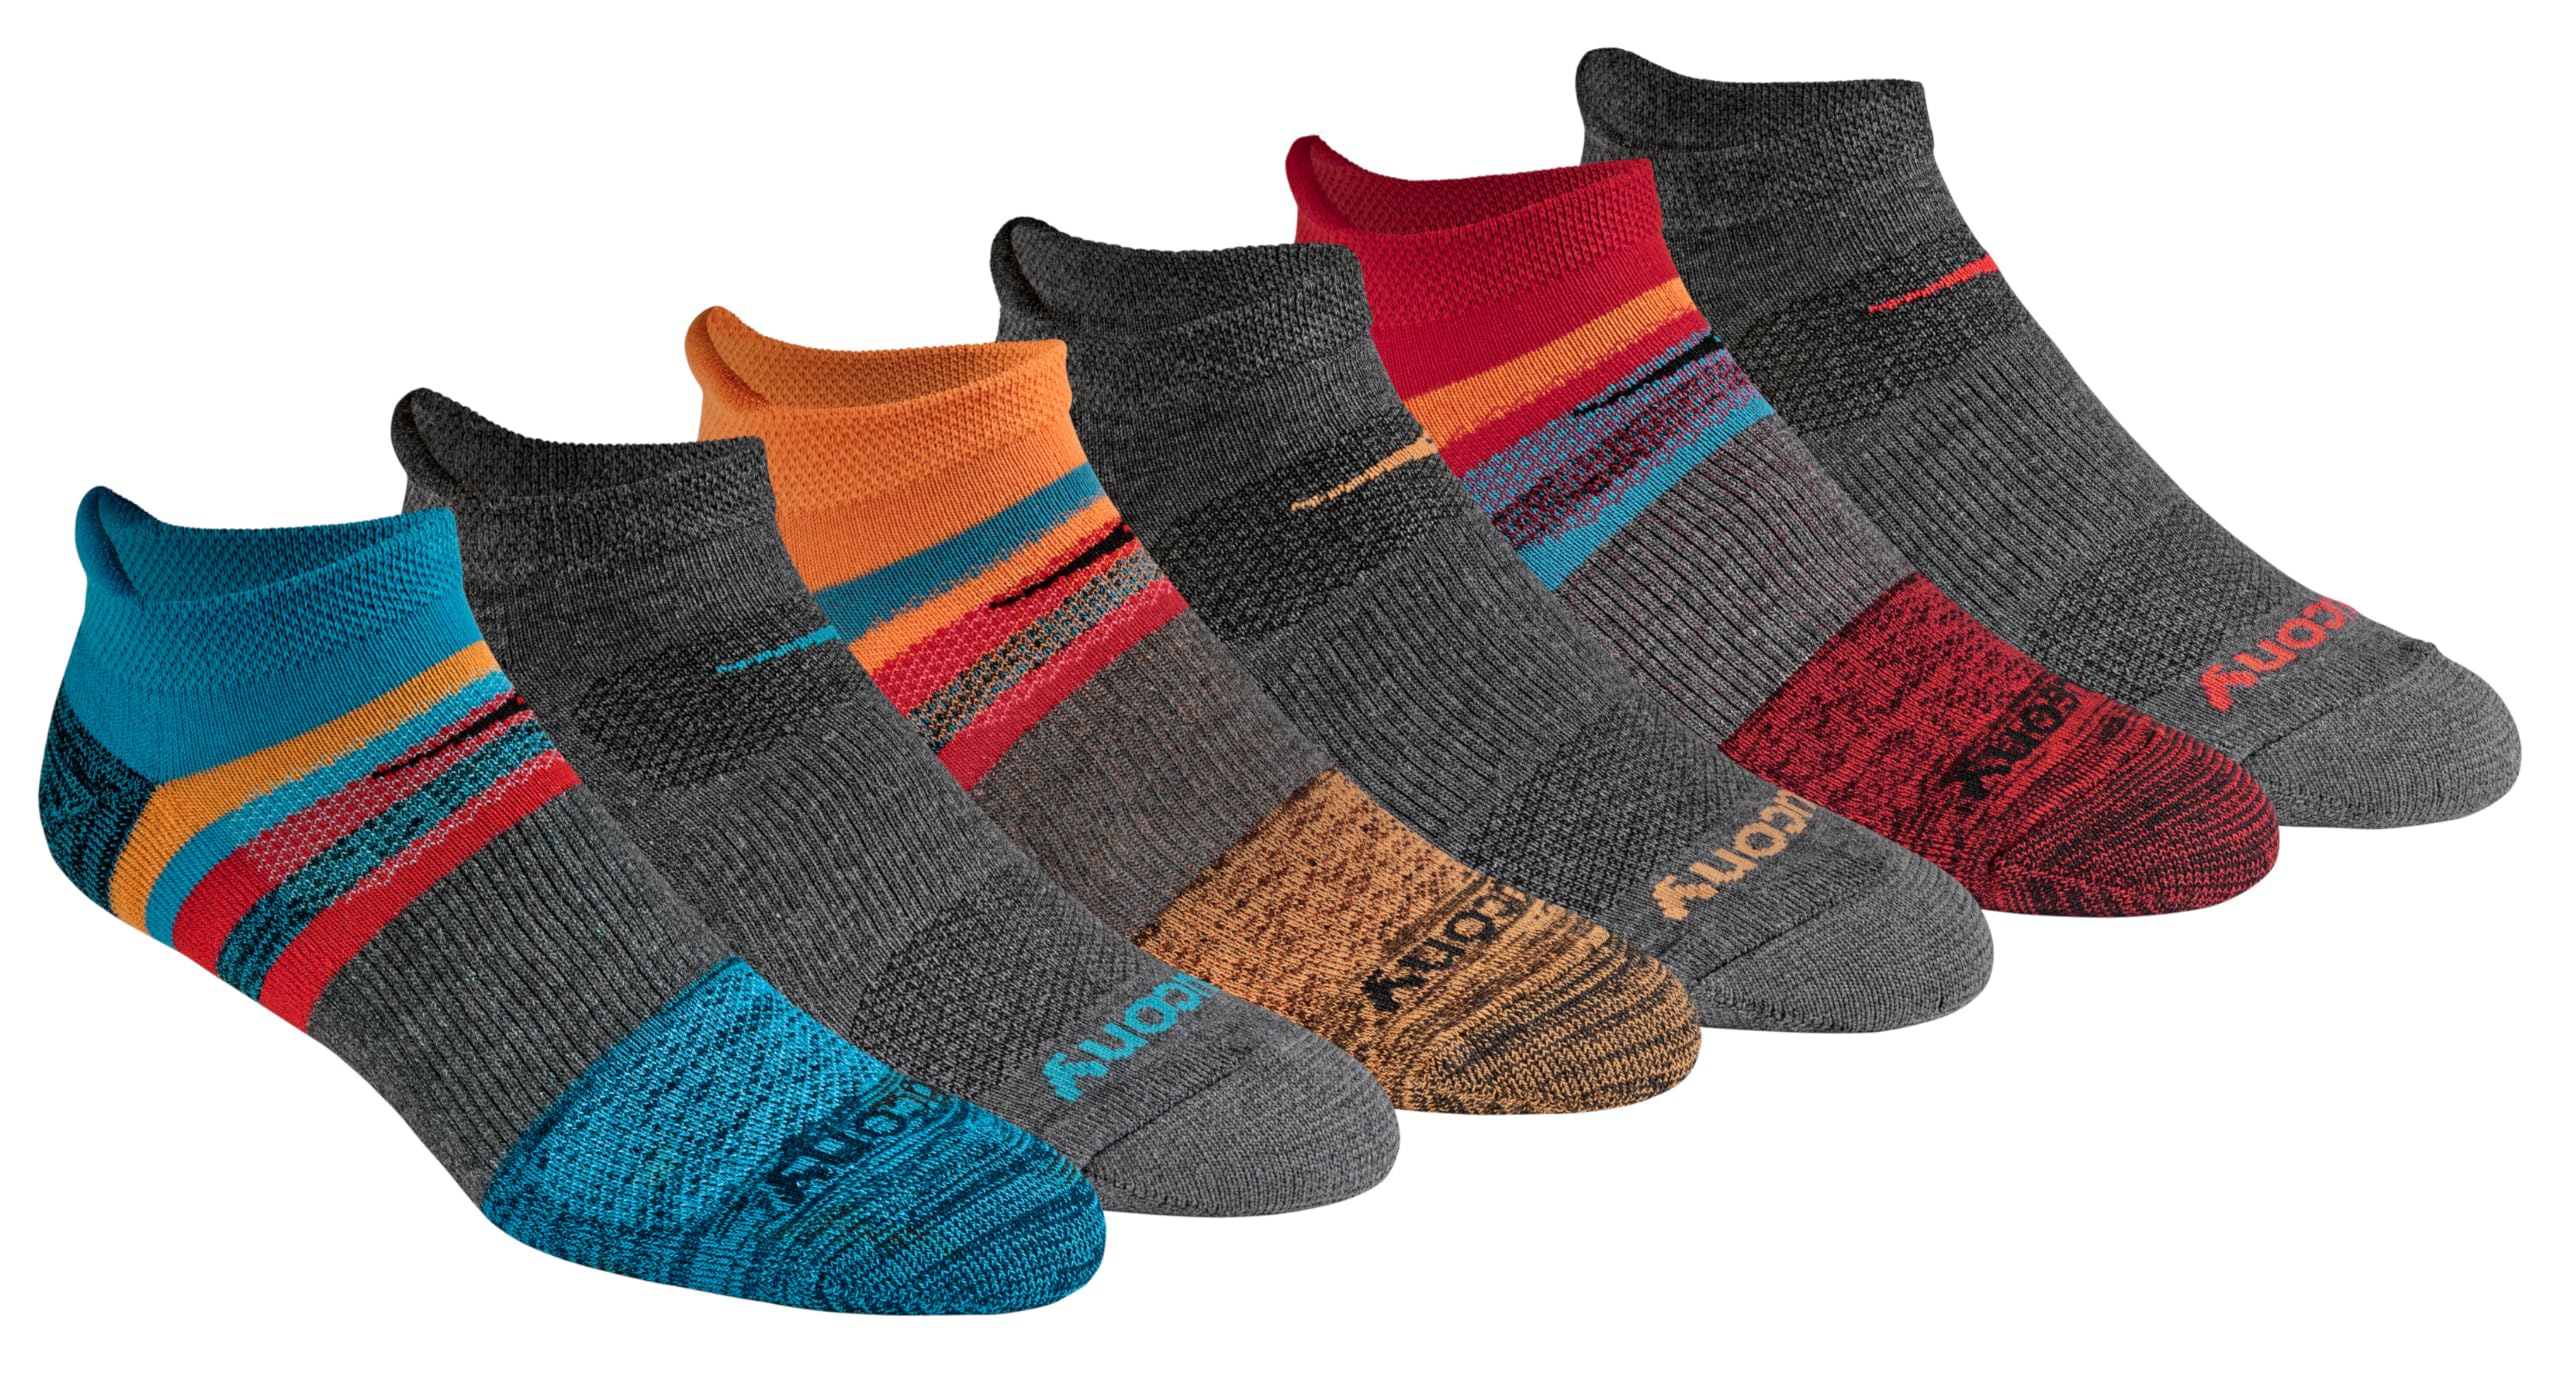 Saucony Men's Mesh Ventilating Comfort Fit Performance Tab Socks, 6/12 Pairs, M-L, Charcoal Fashion (6 Pairs), Large